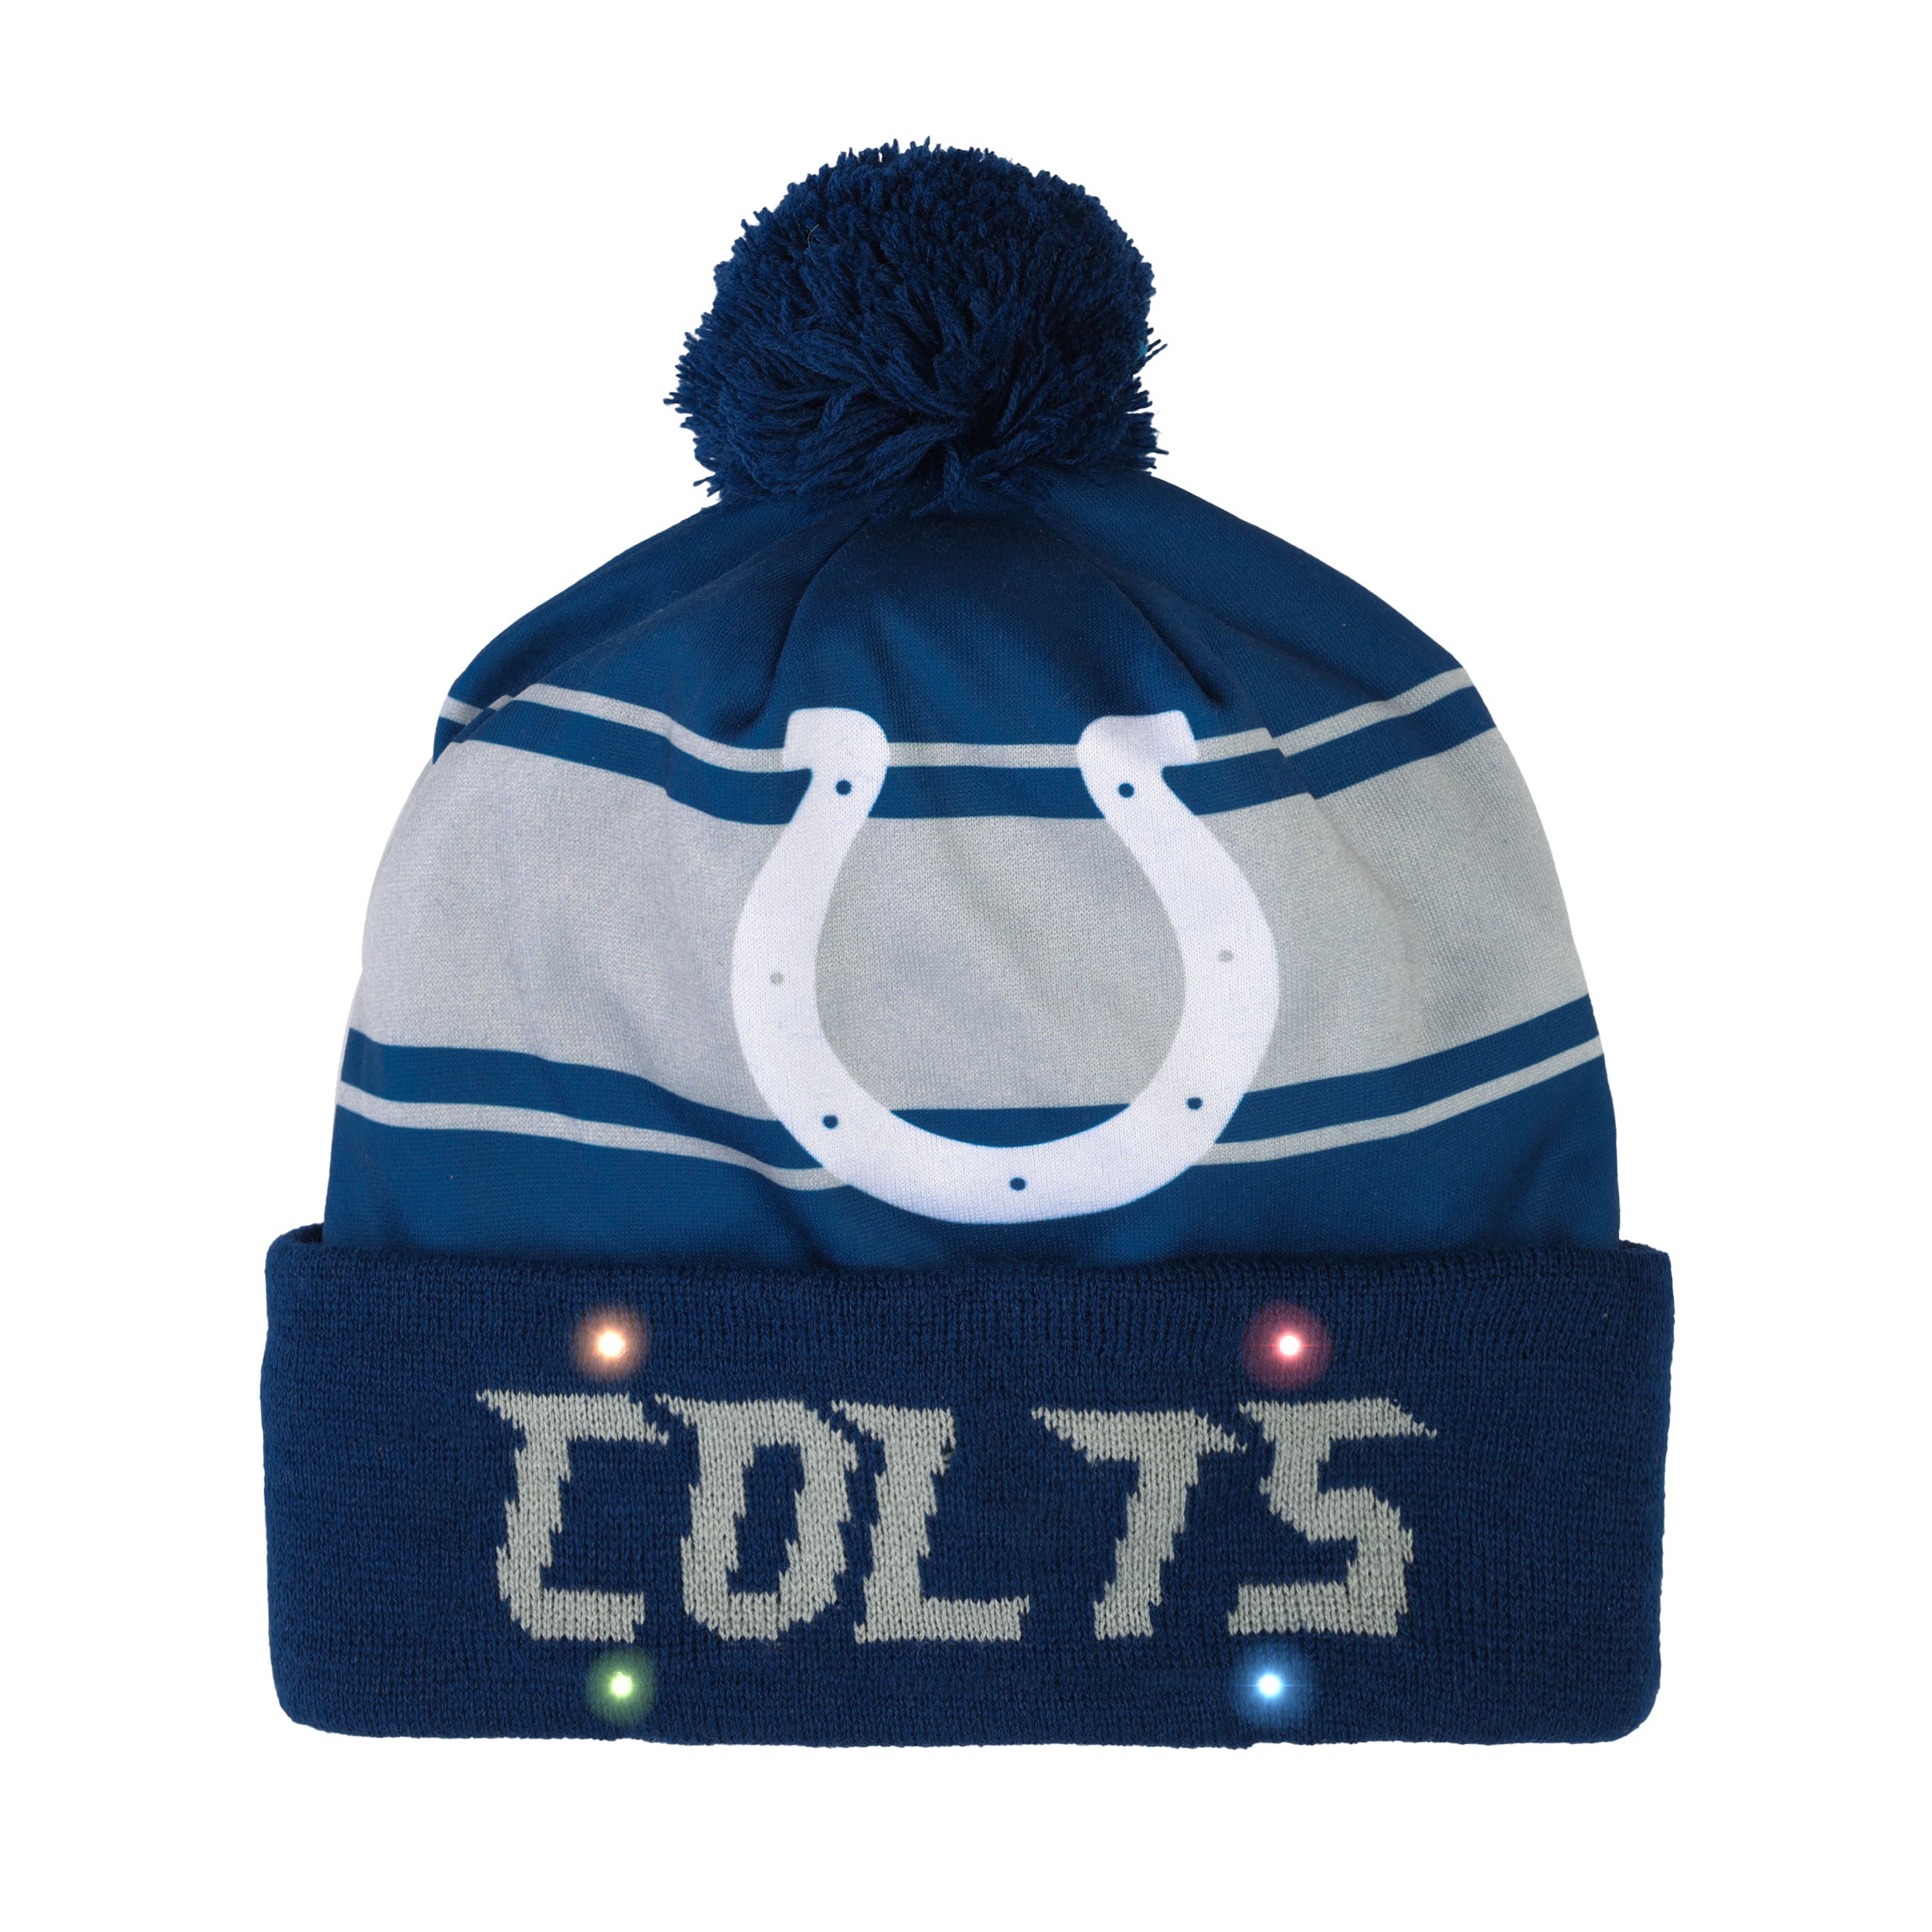 colts knit hat